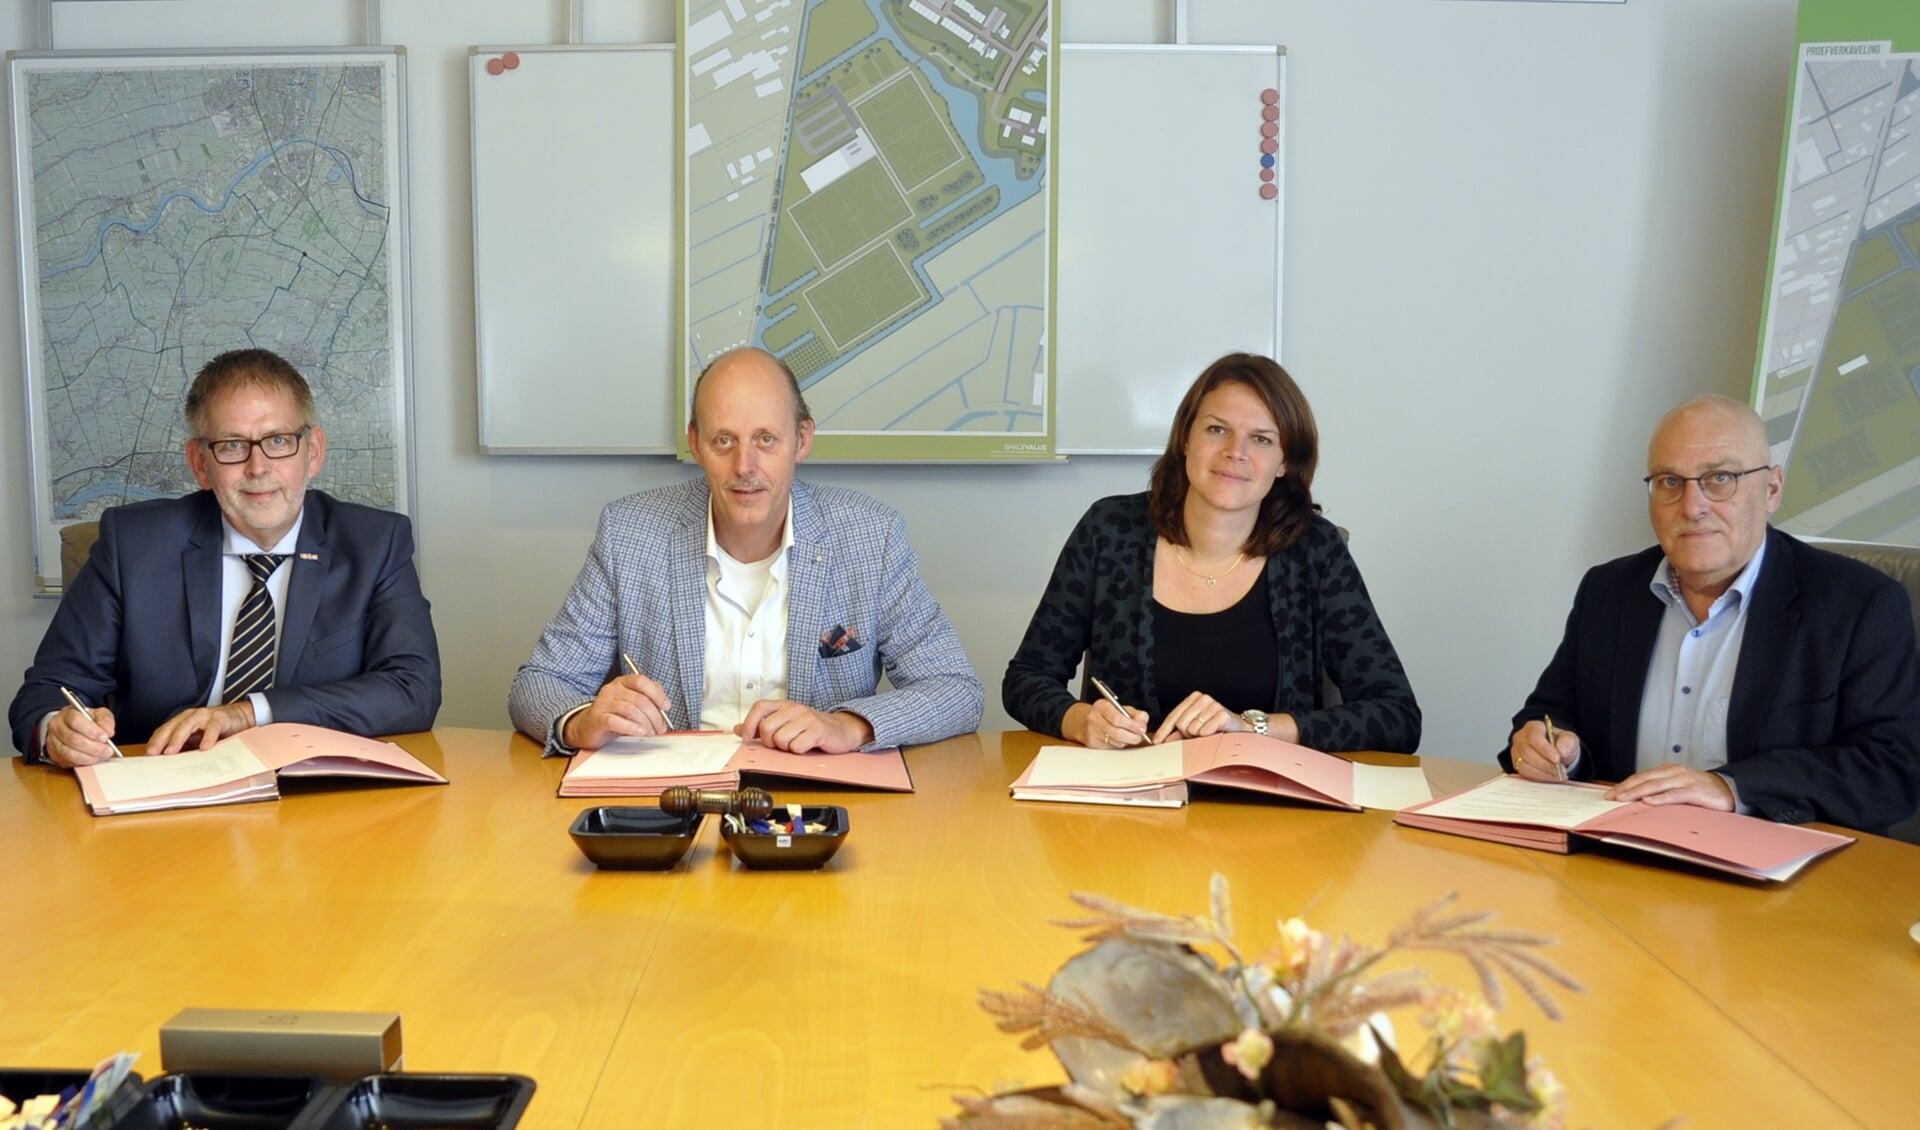 • Wethouder Maks van Middelkoop, Sjaak Versluis, Aninja ’t Lam, wethouder Herman van Santen.